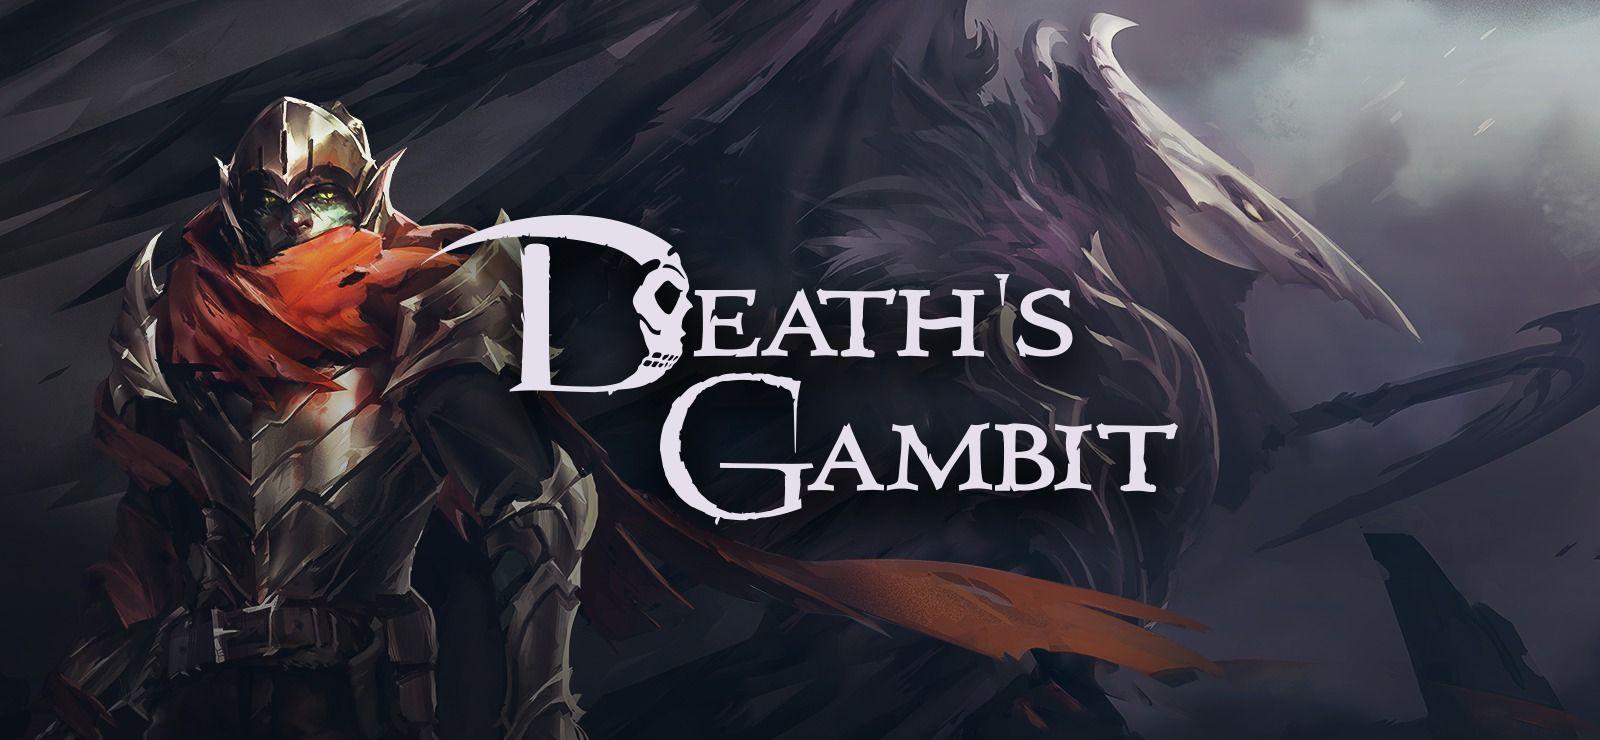 Death's Gambit on GOG.com